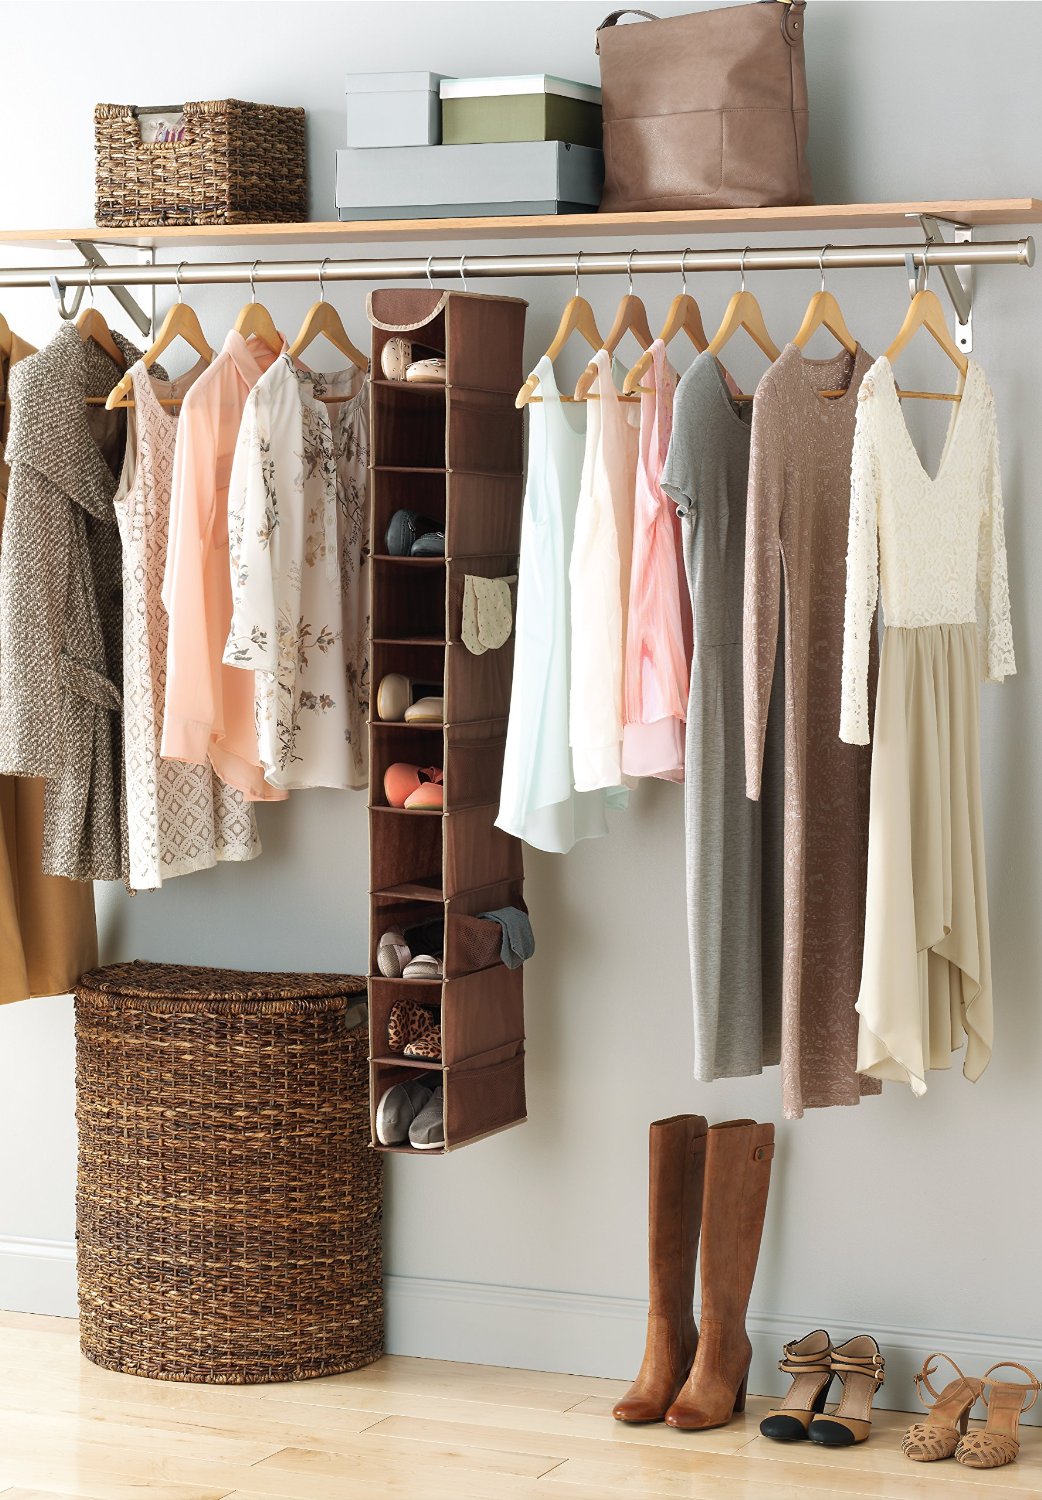 15 Products Every Closet Needs | www.onecrazyhouse.com